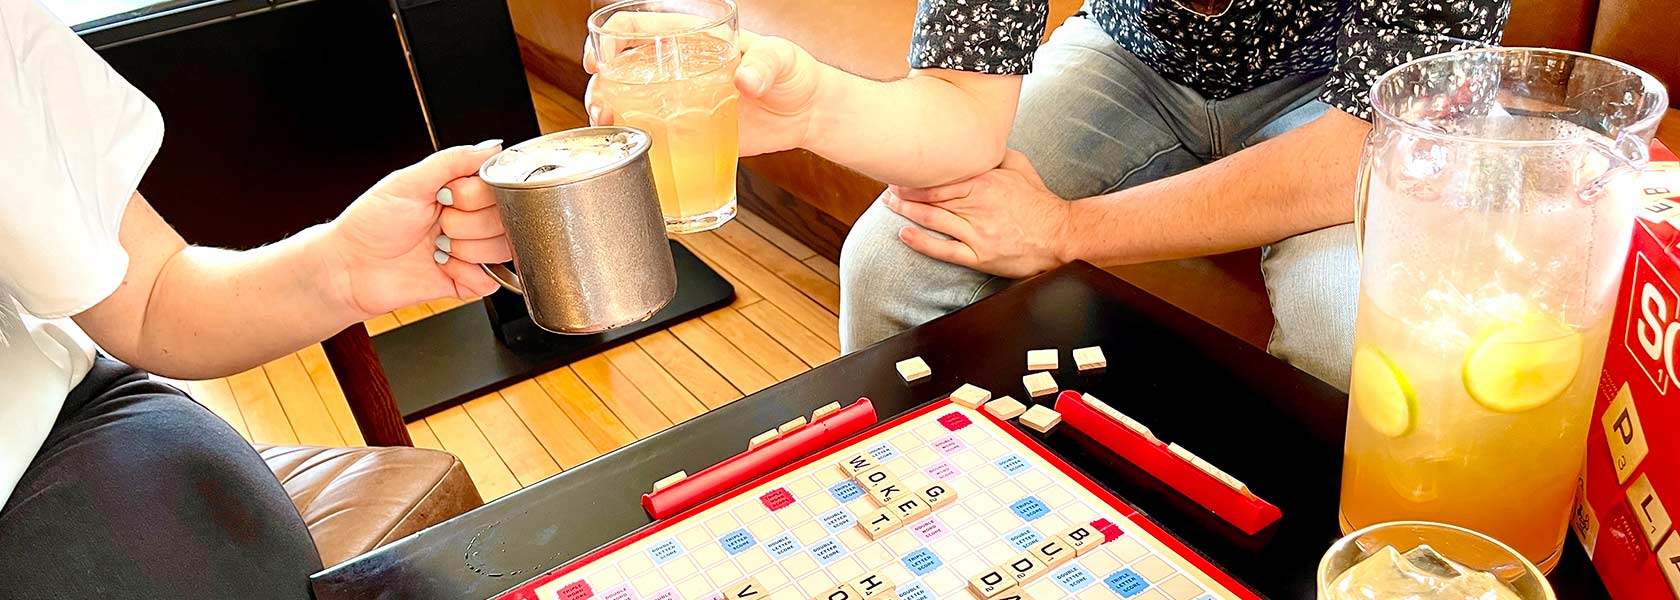 Hands toasting glasses of happy hour beverages over Scrabble gamer board